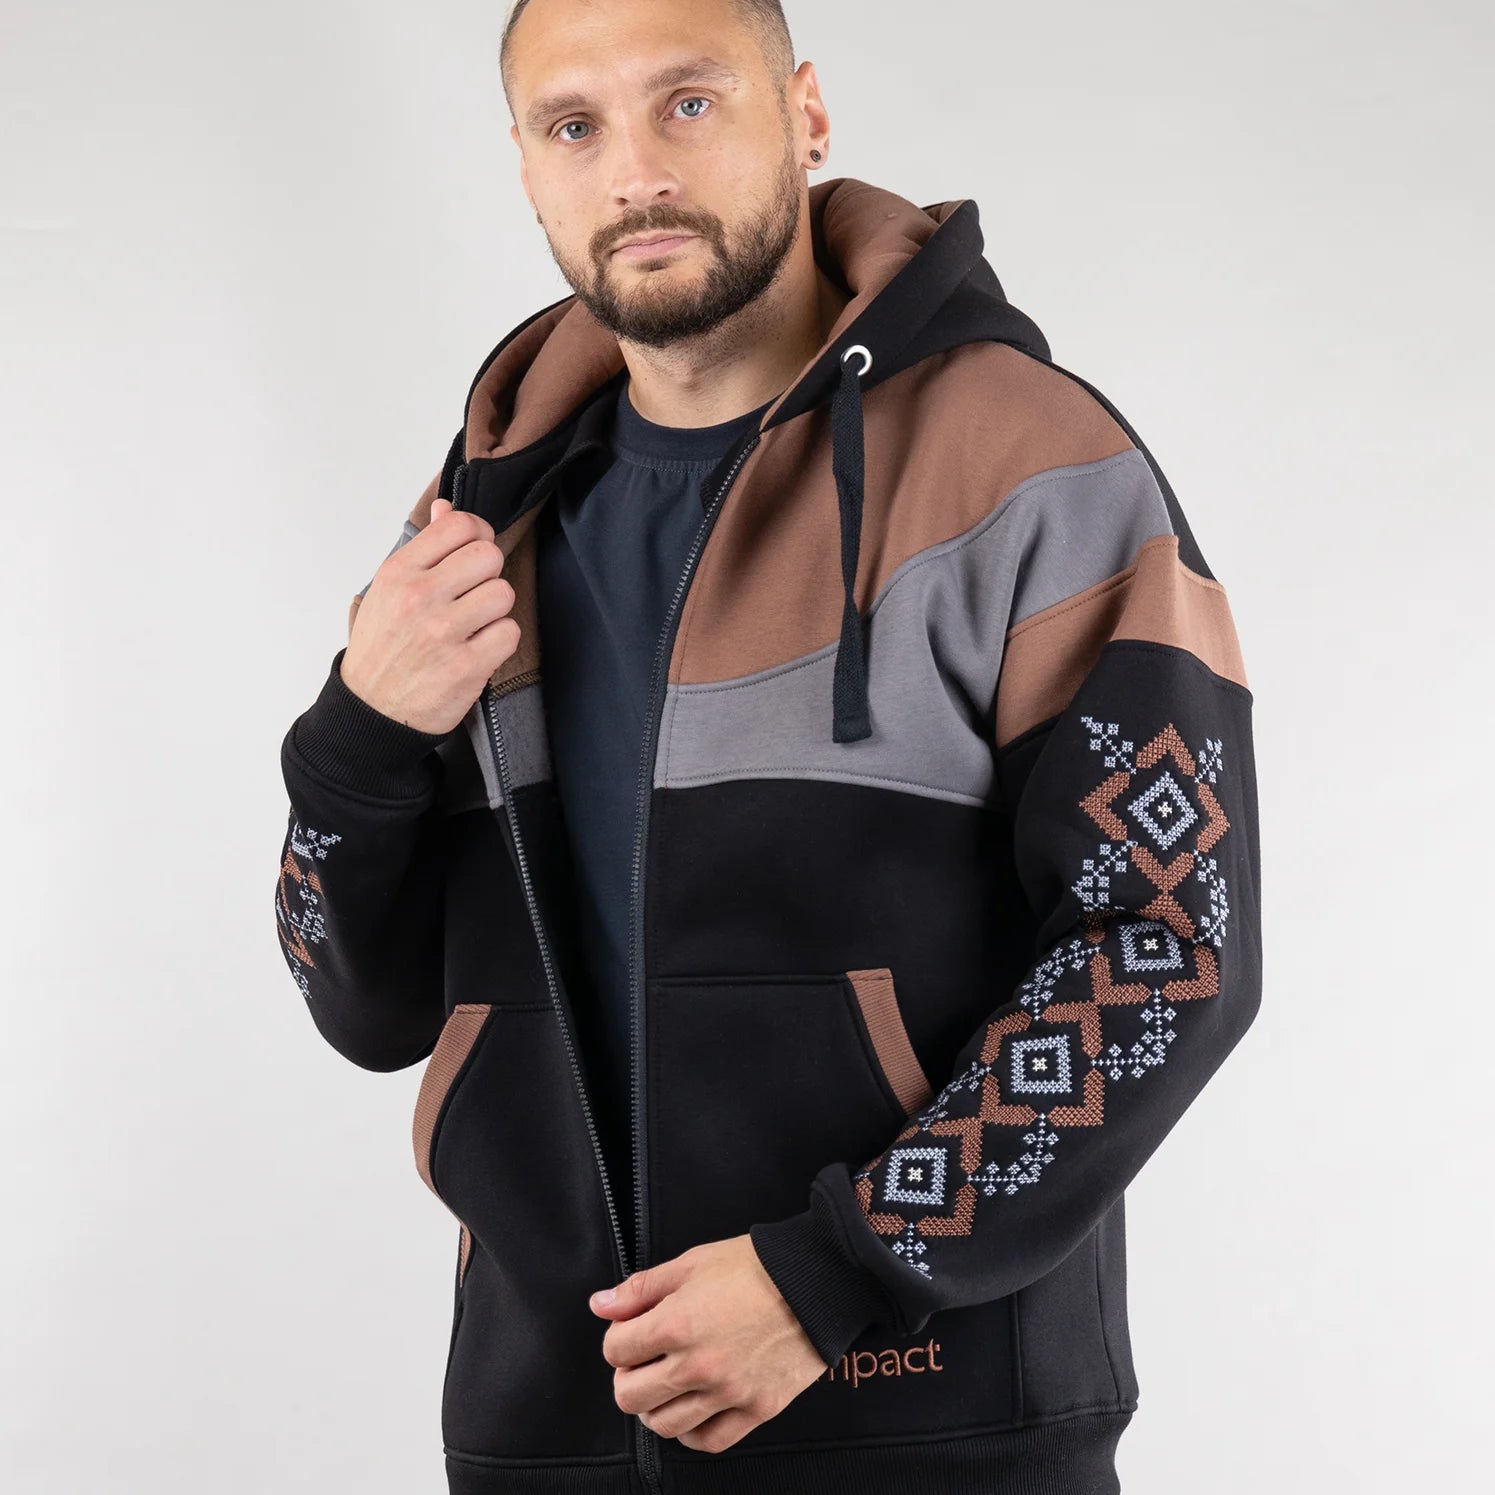 Urban Zip-up hoodie “Sunrise”, Ukrainian vyshyvanka style. Black/Brown